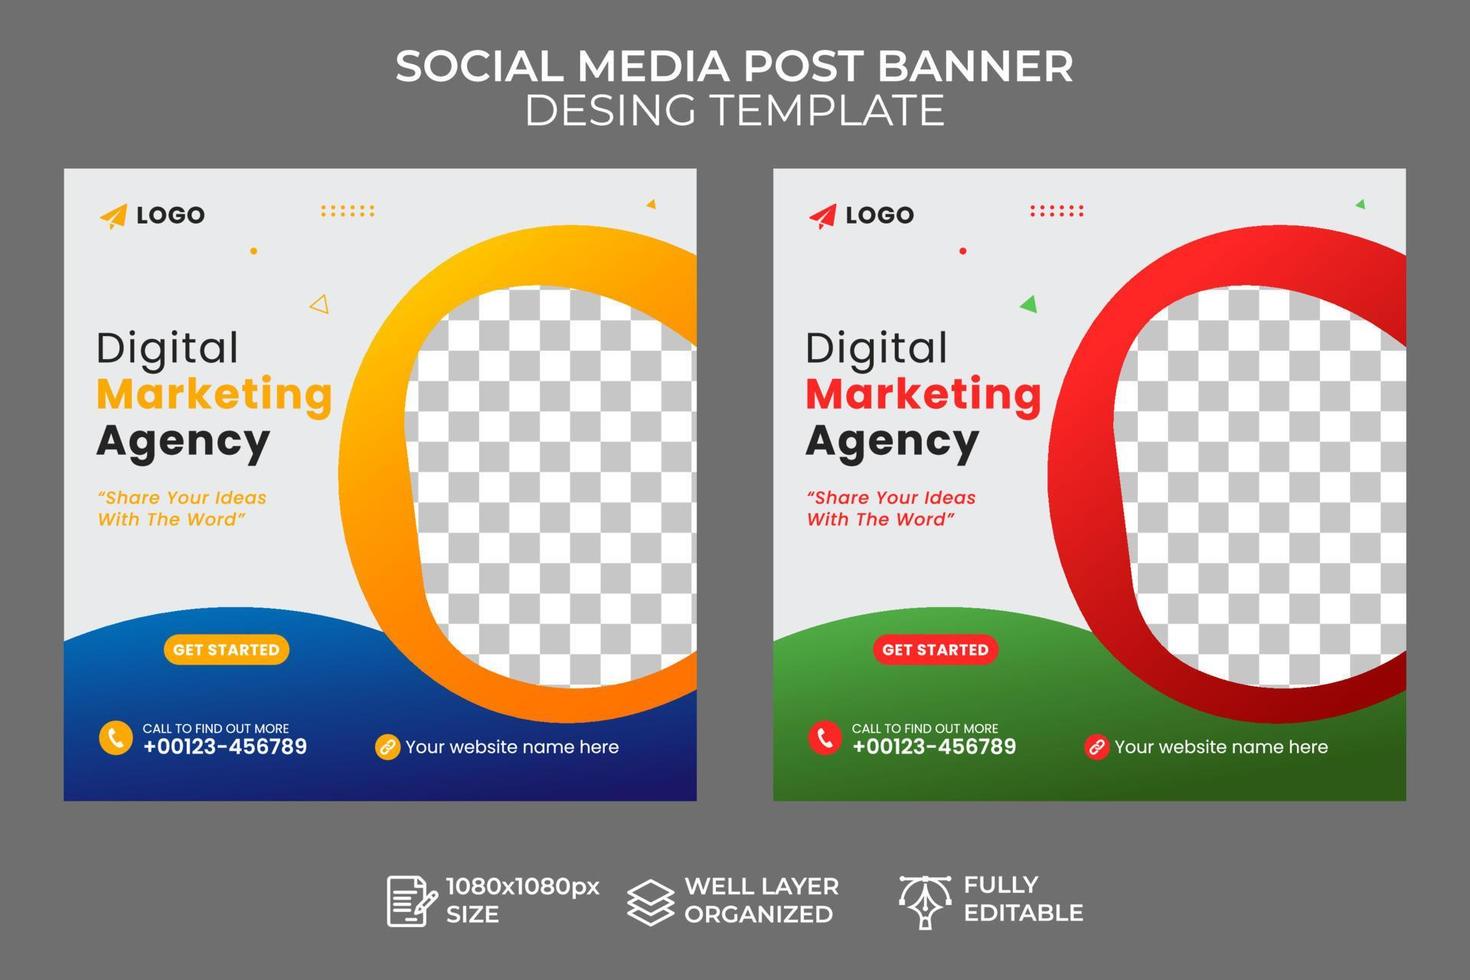 Digital Marketing Social Media Post Template, Digital Business Marketing Social Media Banner, creative business agency, Corporate advertising vector